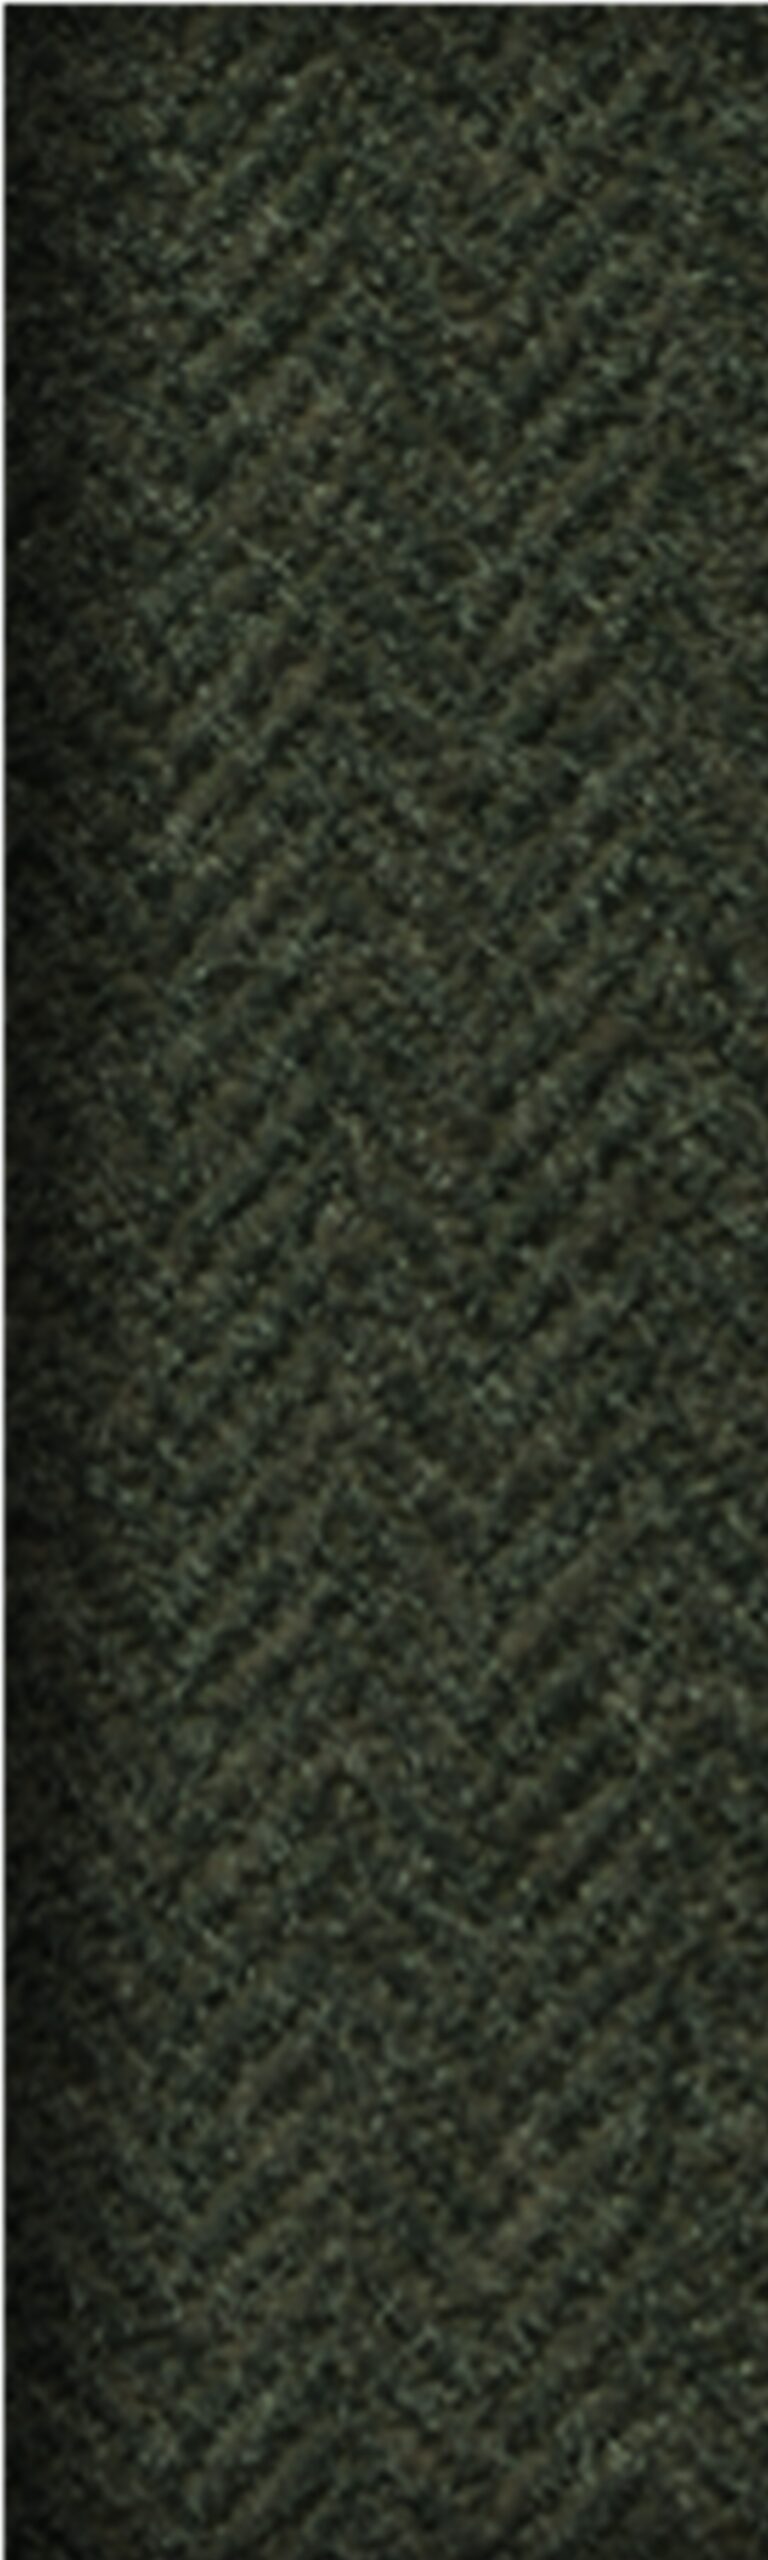 Harris-Tweed-Spruce-Swatch-x1400